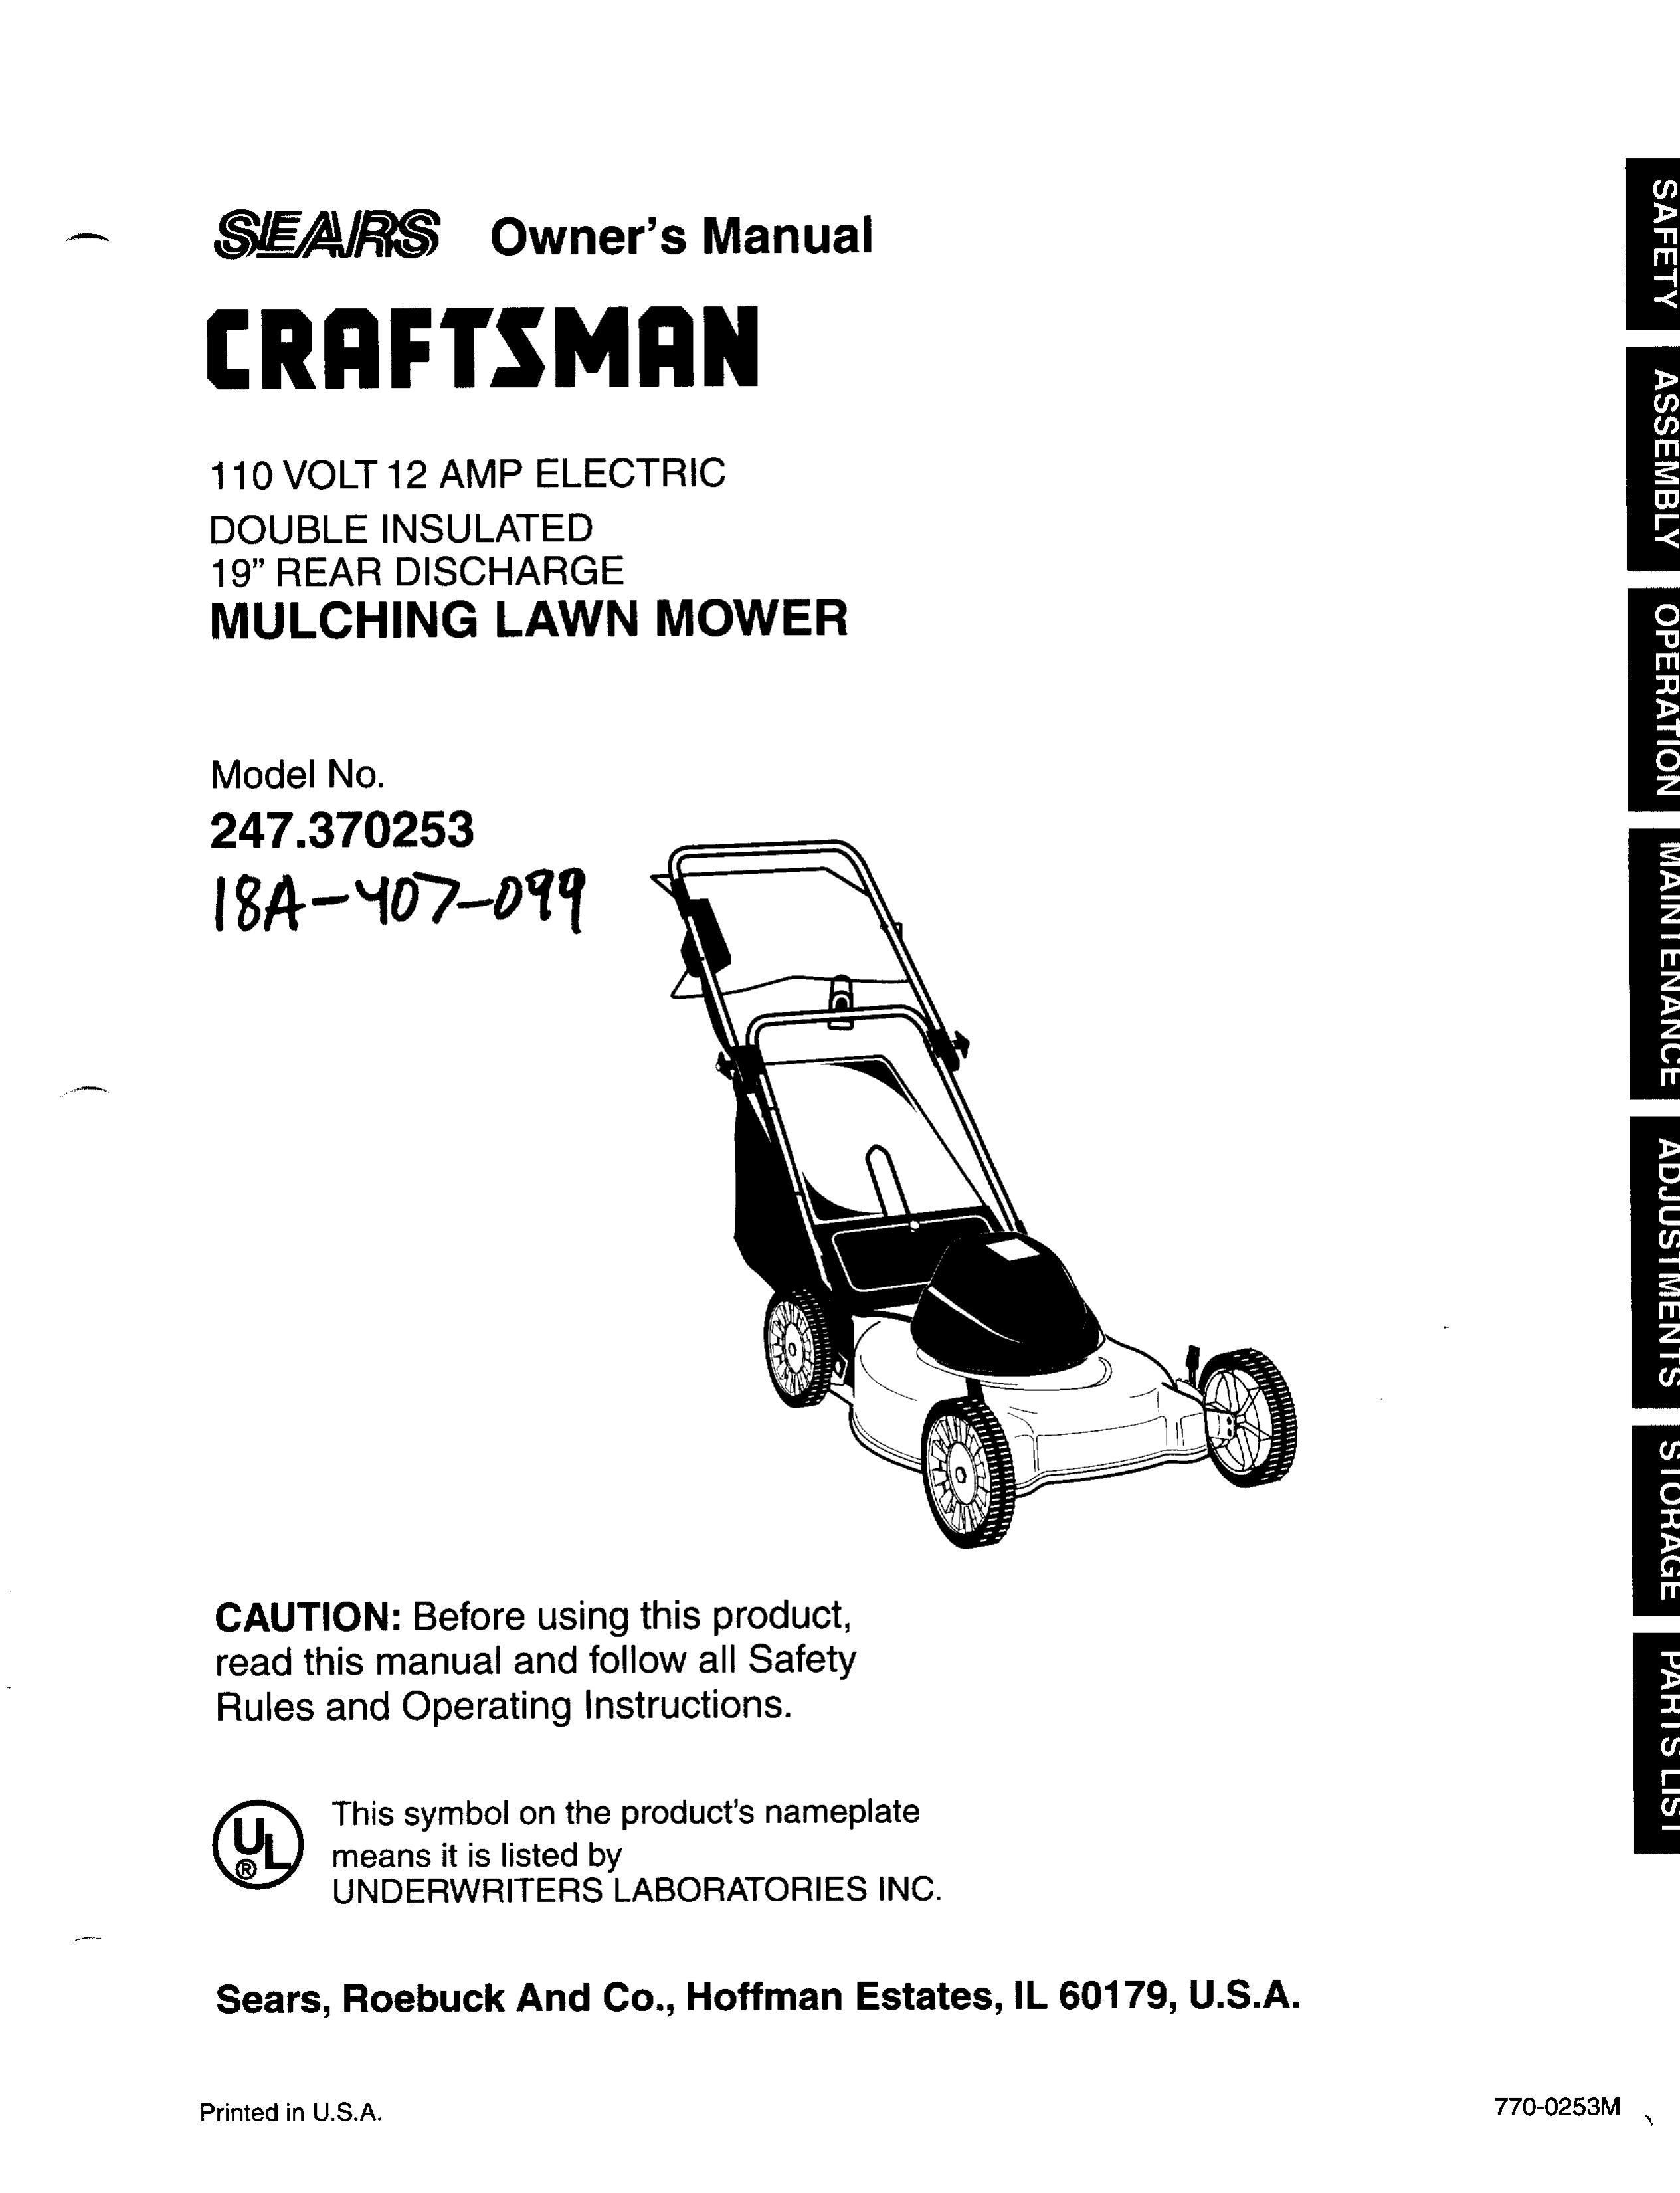 Craftsman 247.370253 Lawn Mower User Manual